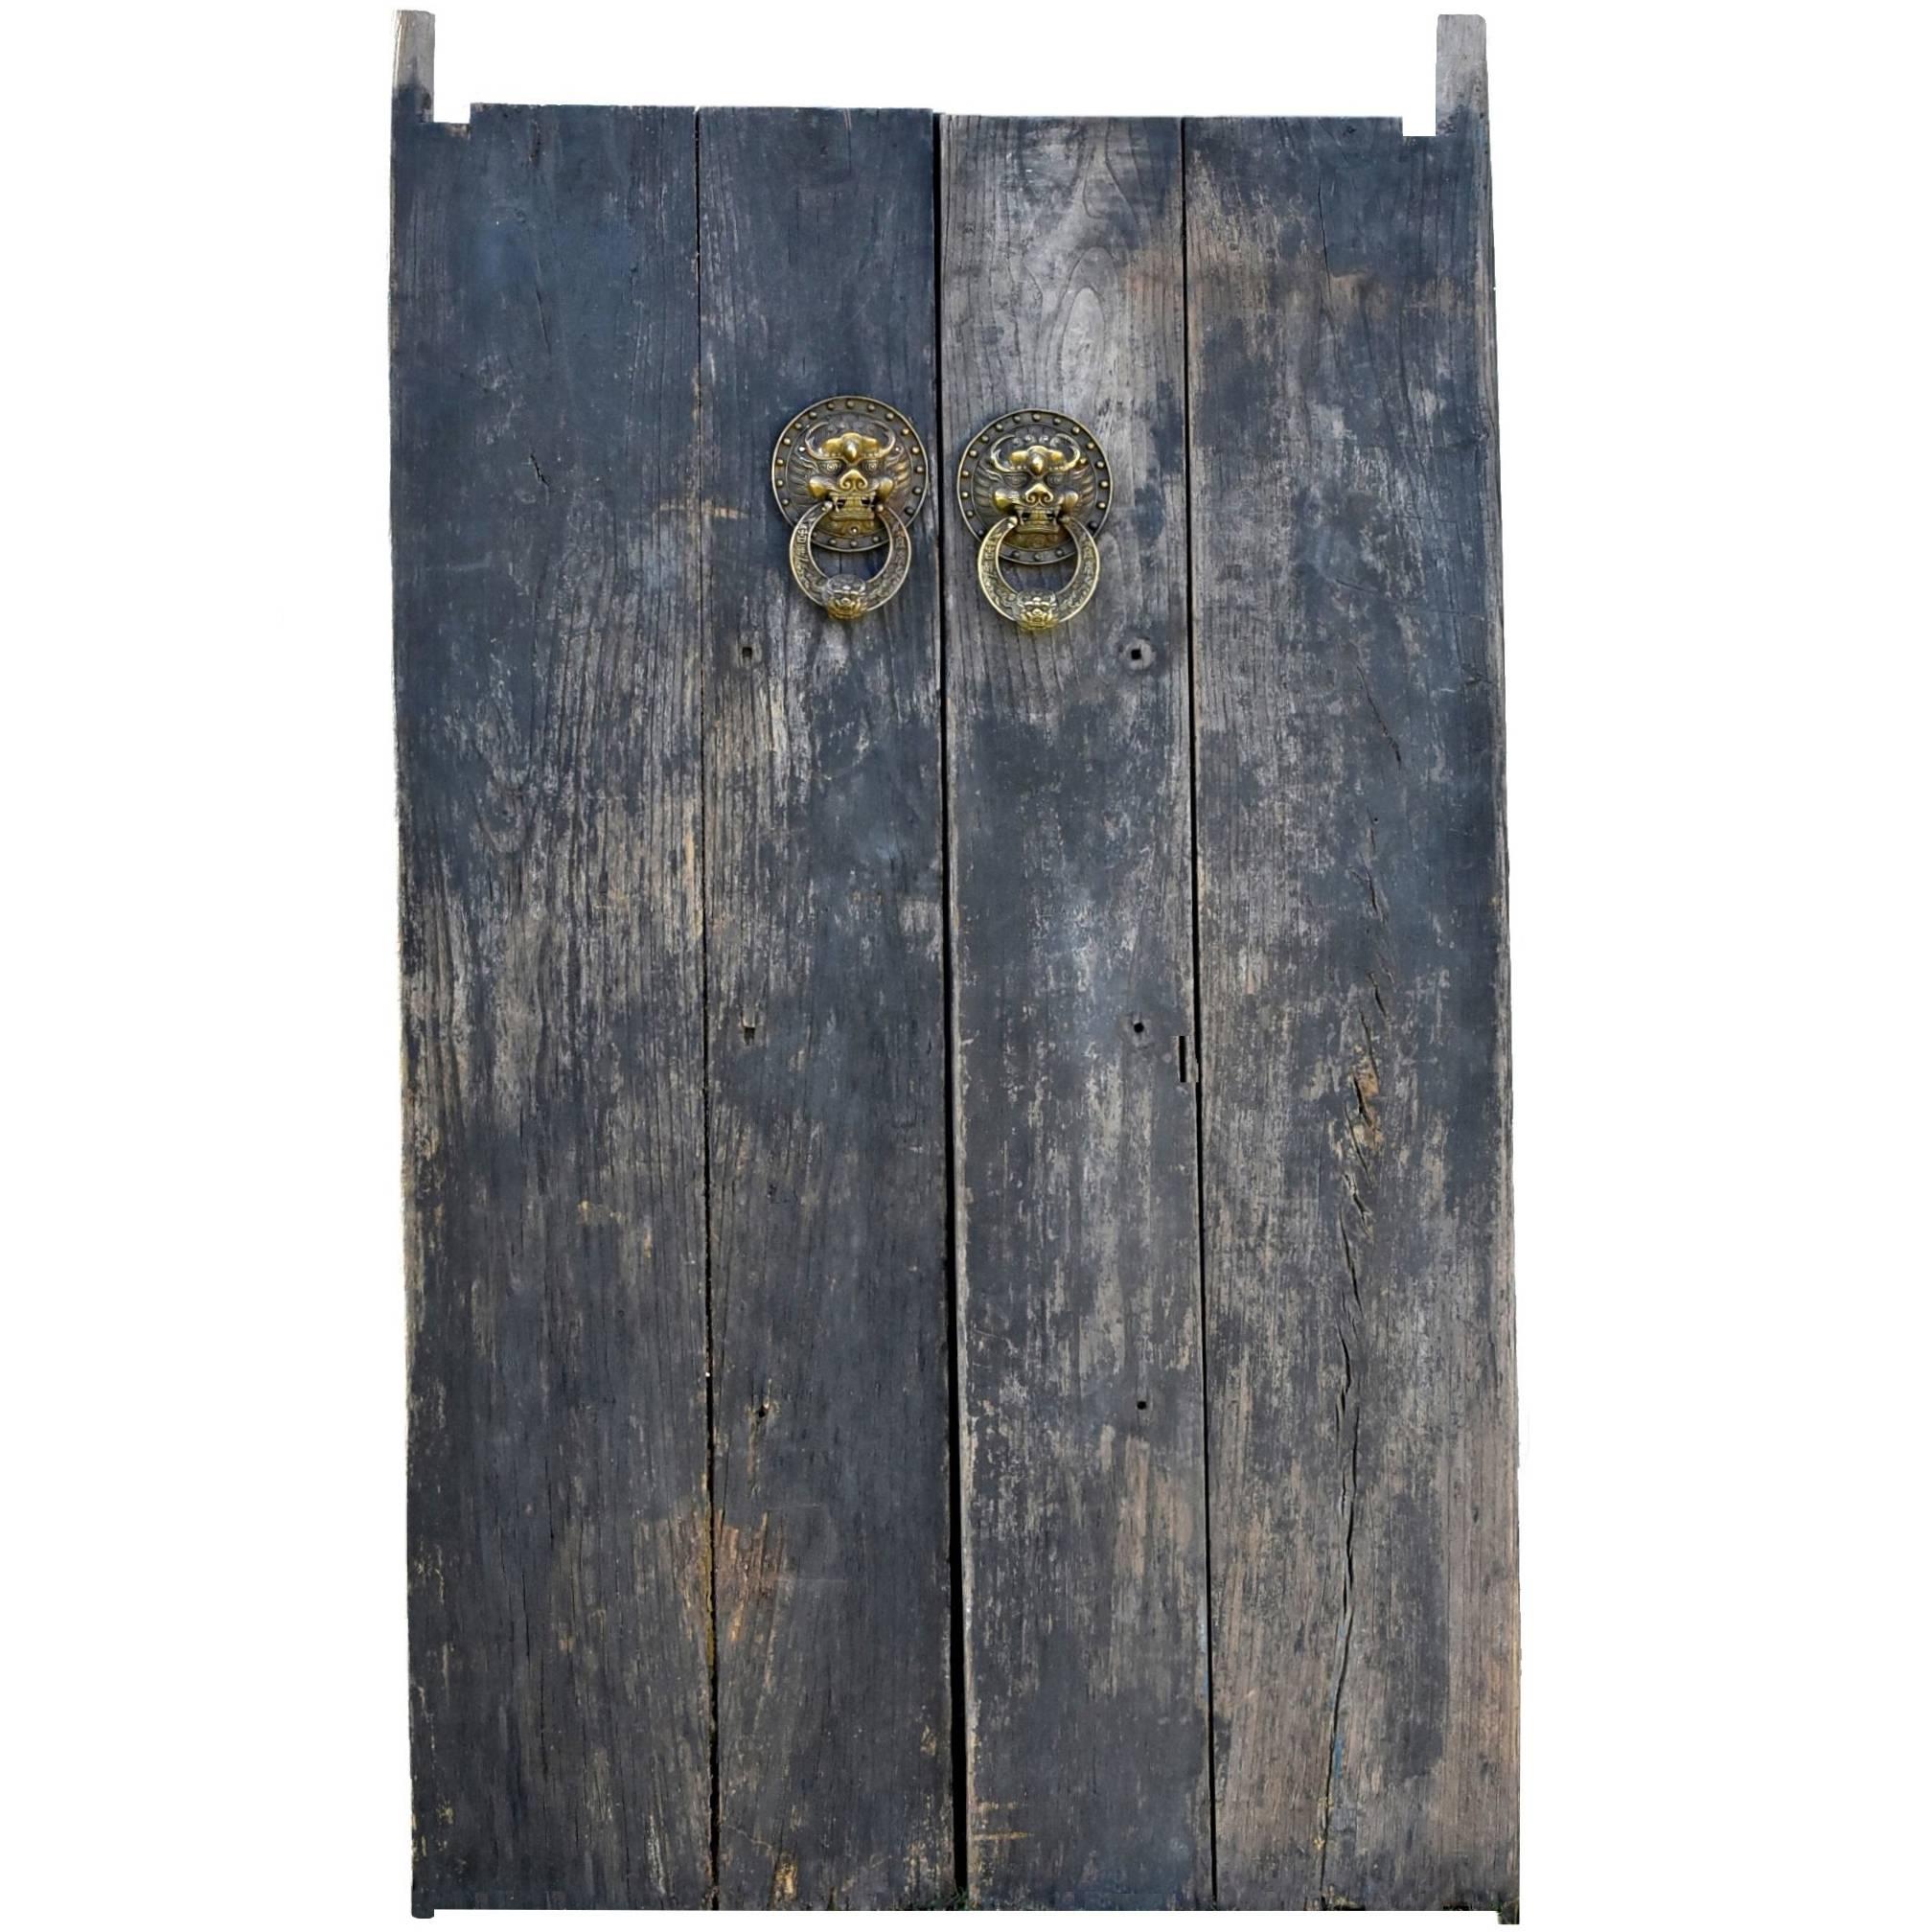 Rustic Antique Doors with Brass Knockers